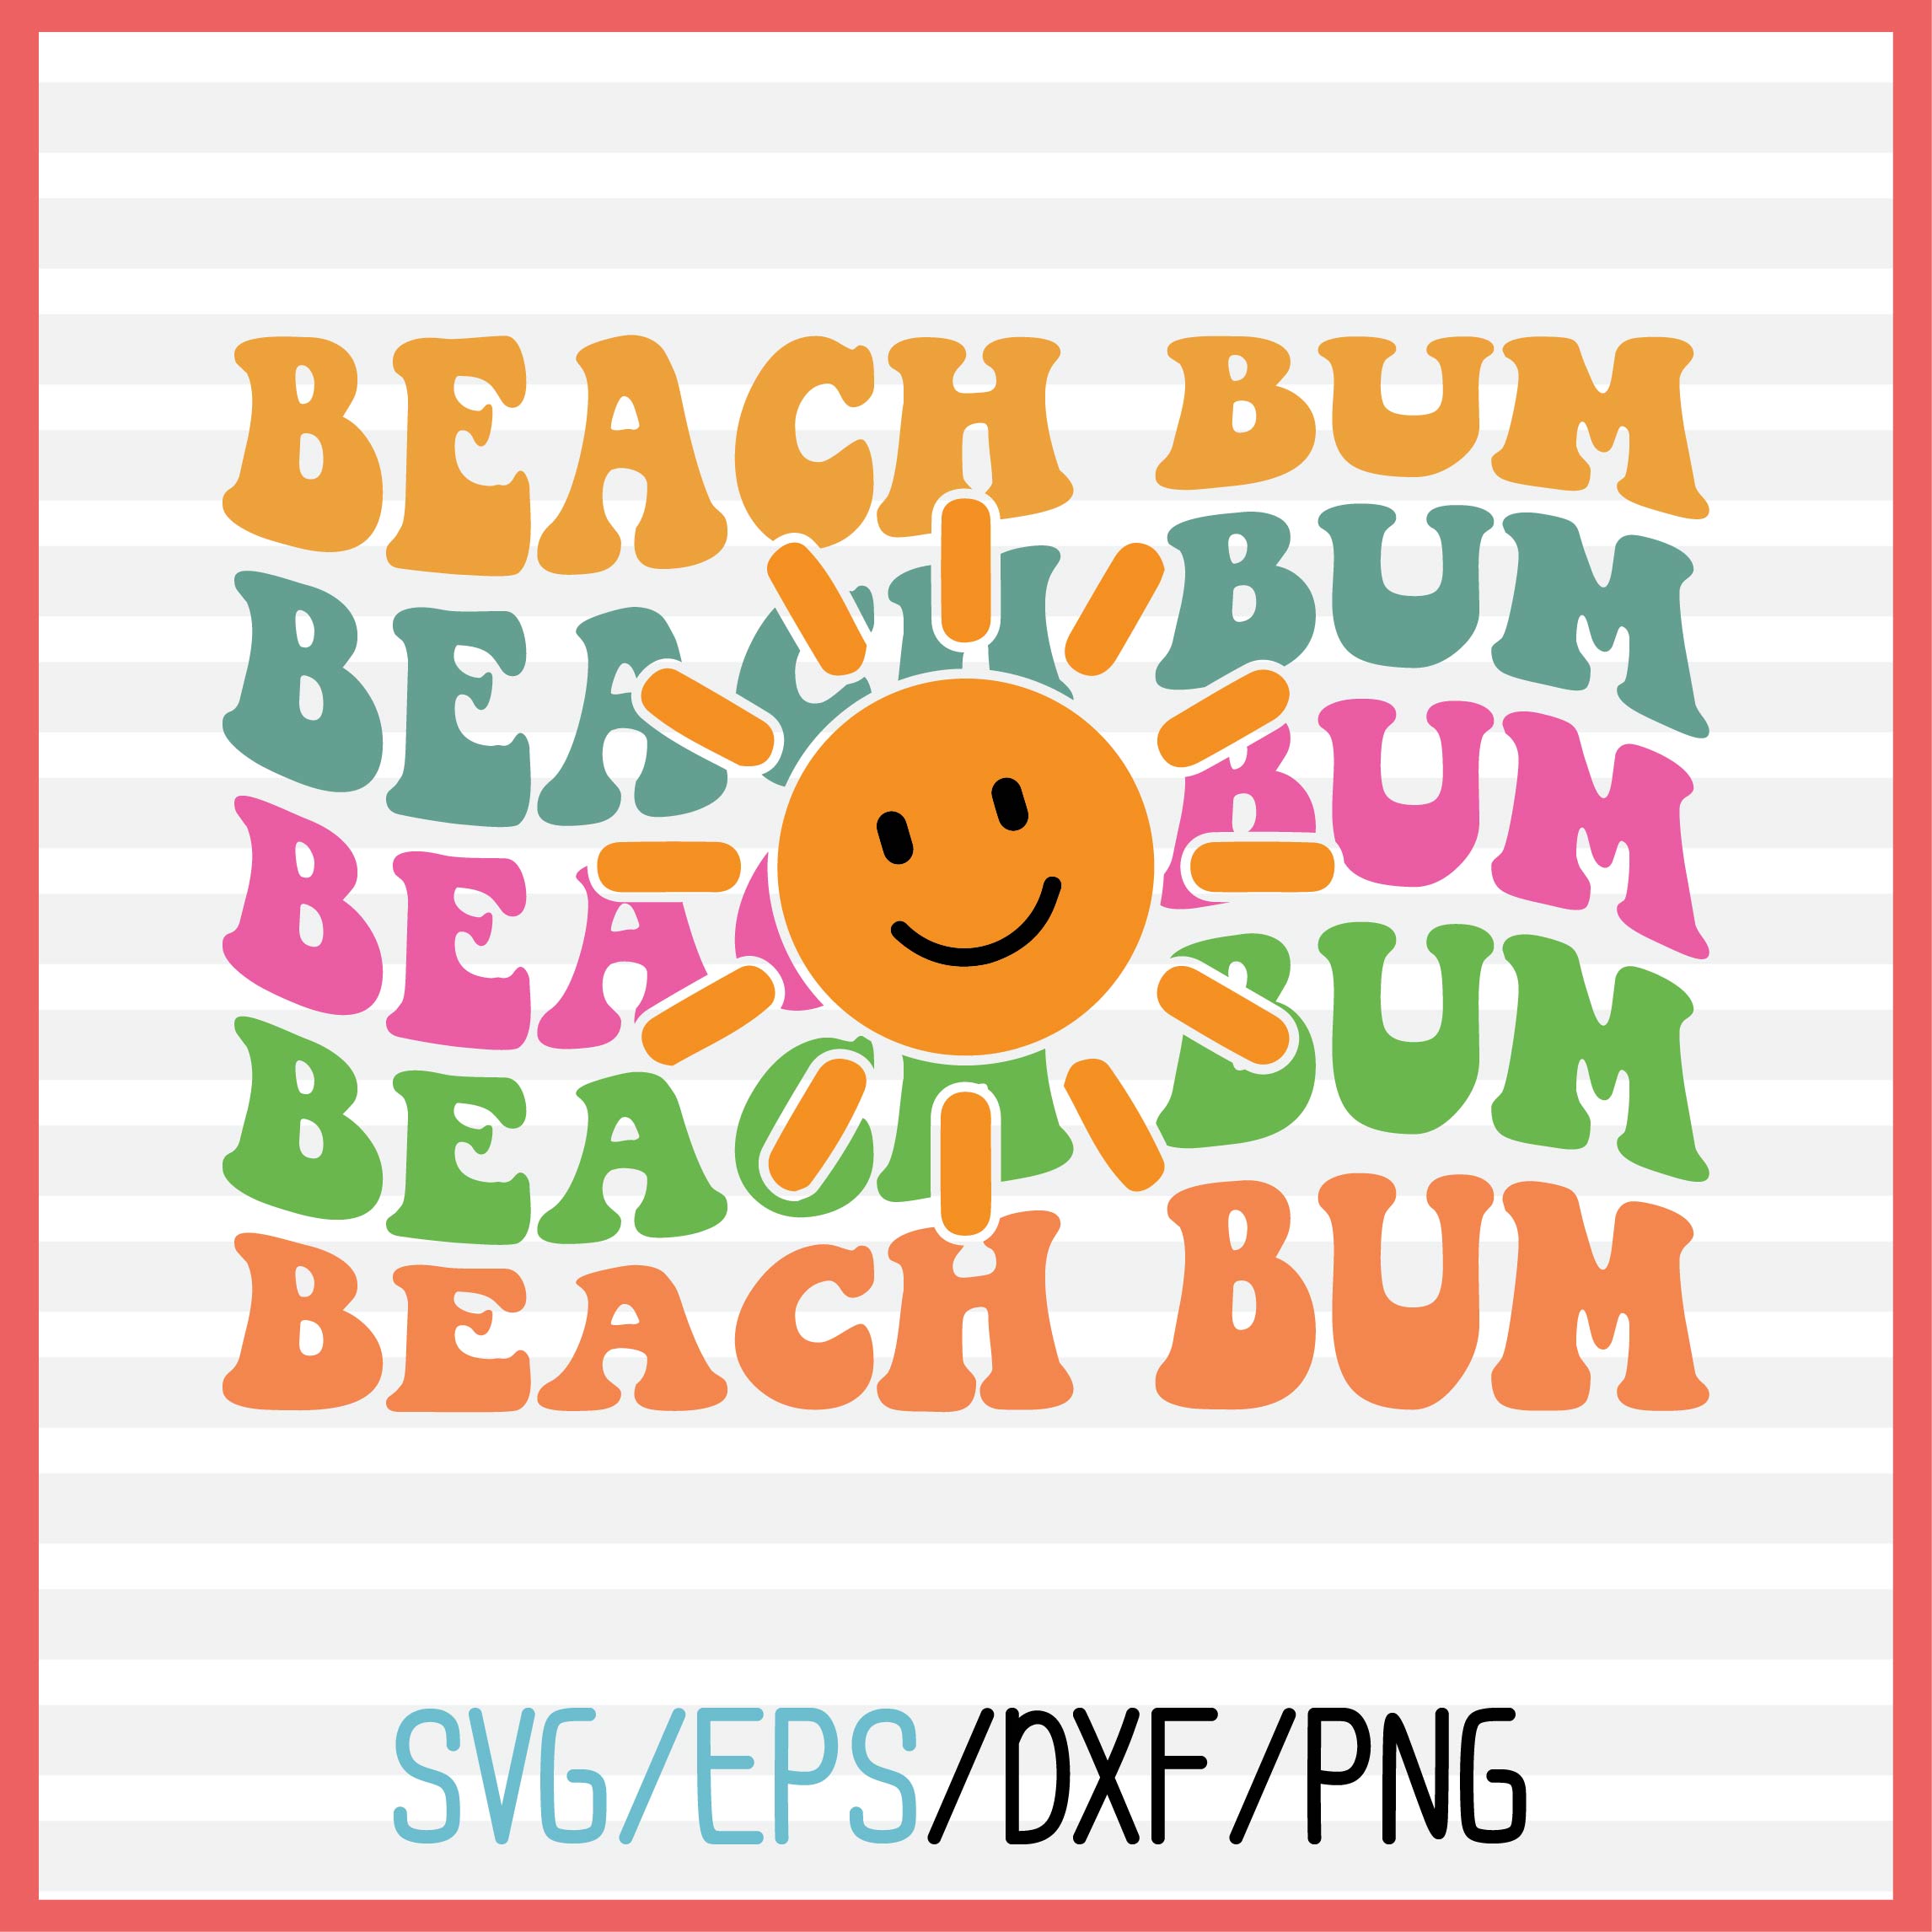 About Beach bum retro svg design cover image.